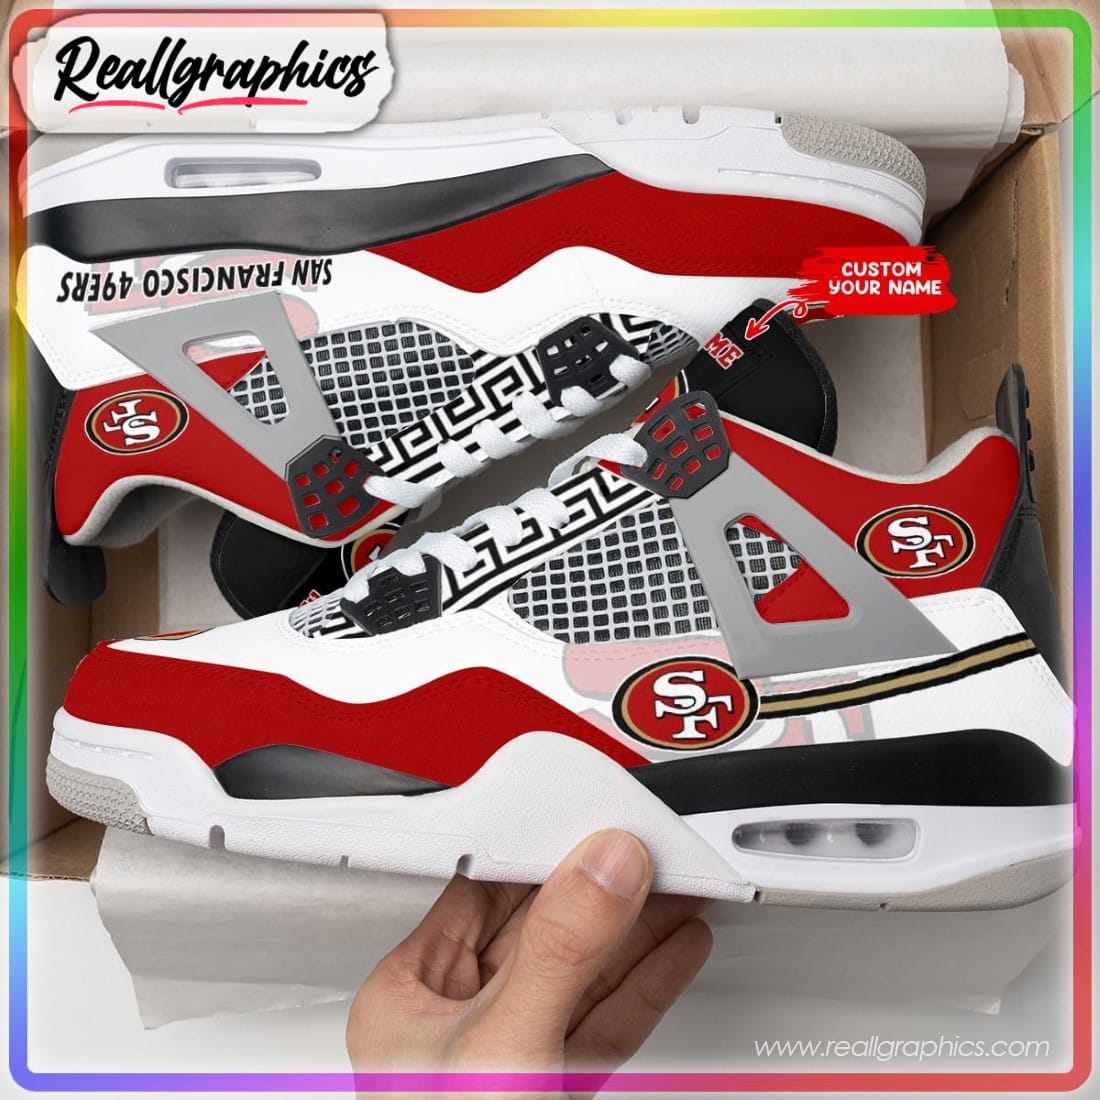 San Francisco 49ers Ink Spalsh Custom Air Jordan 4 - Reallgraphics